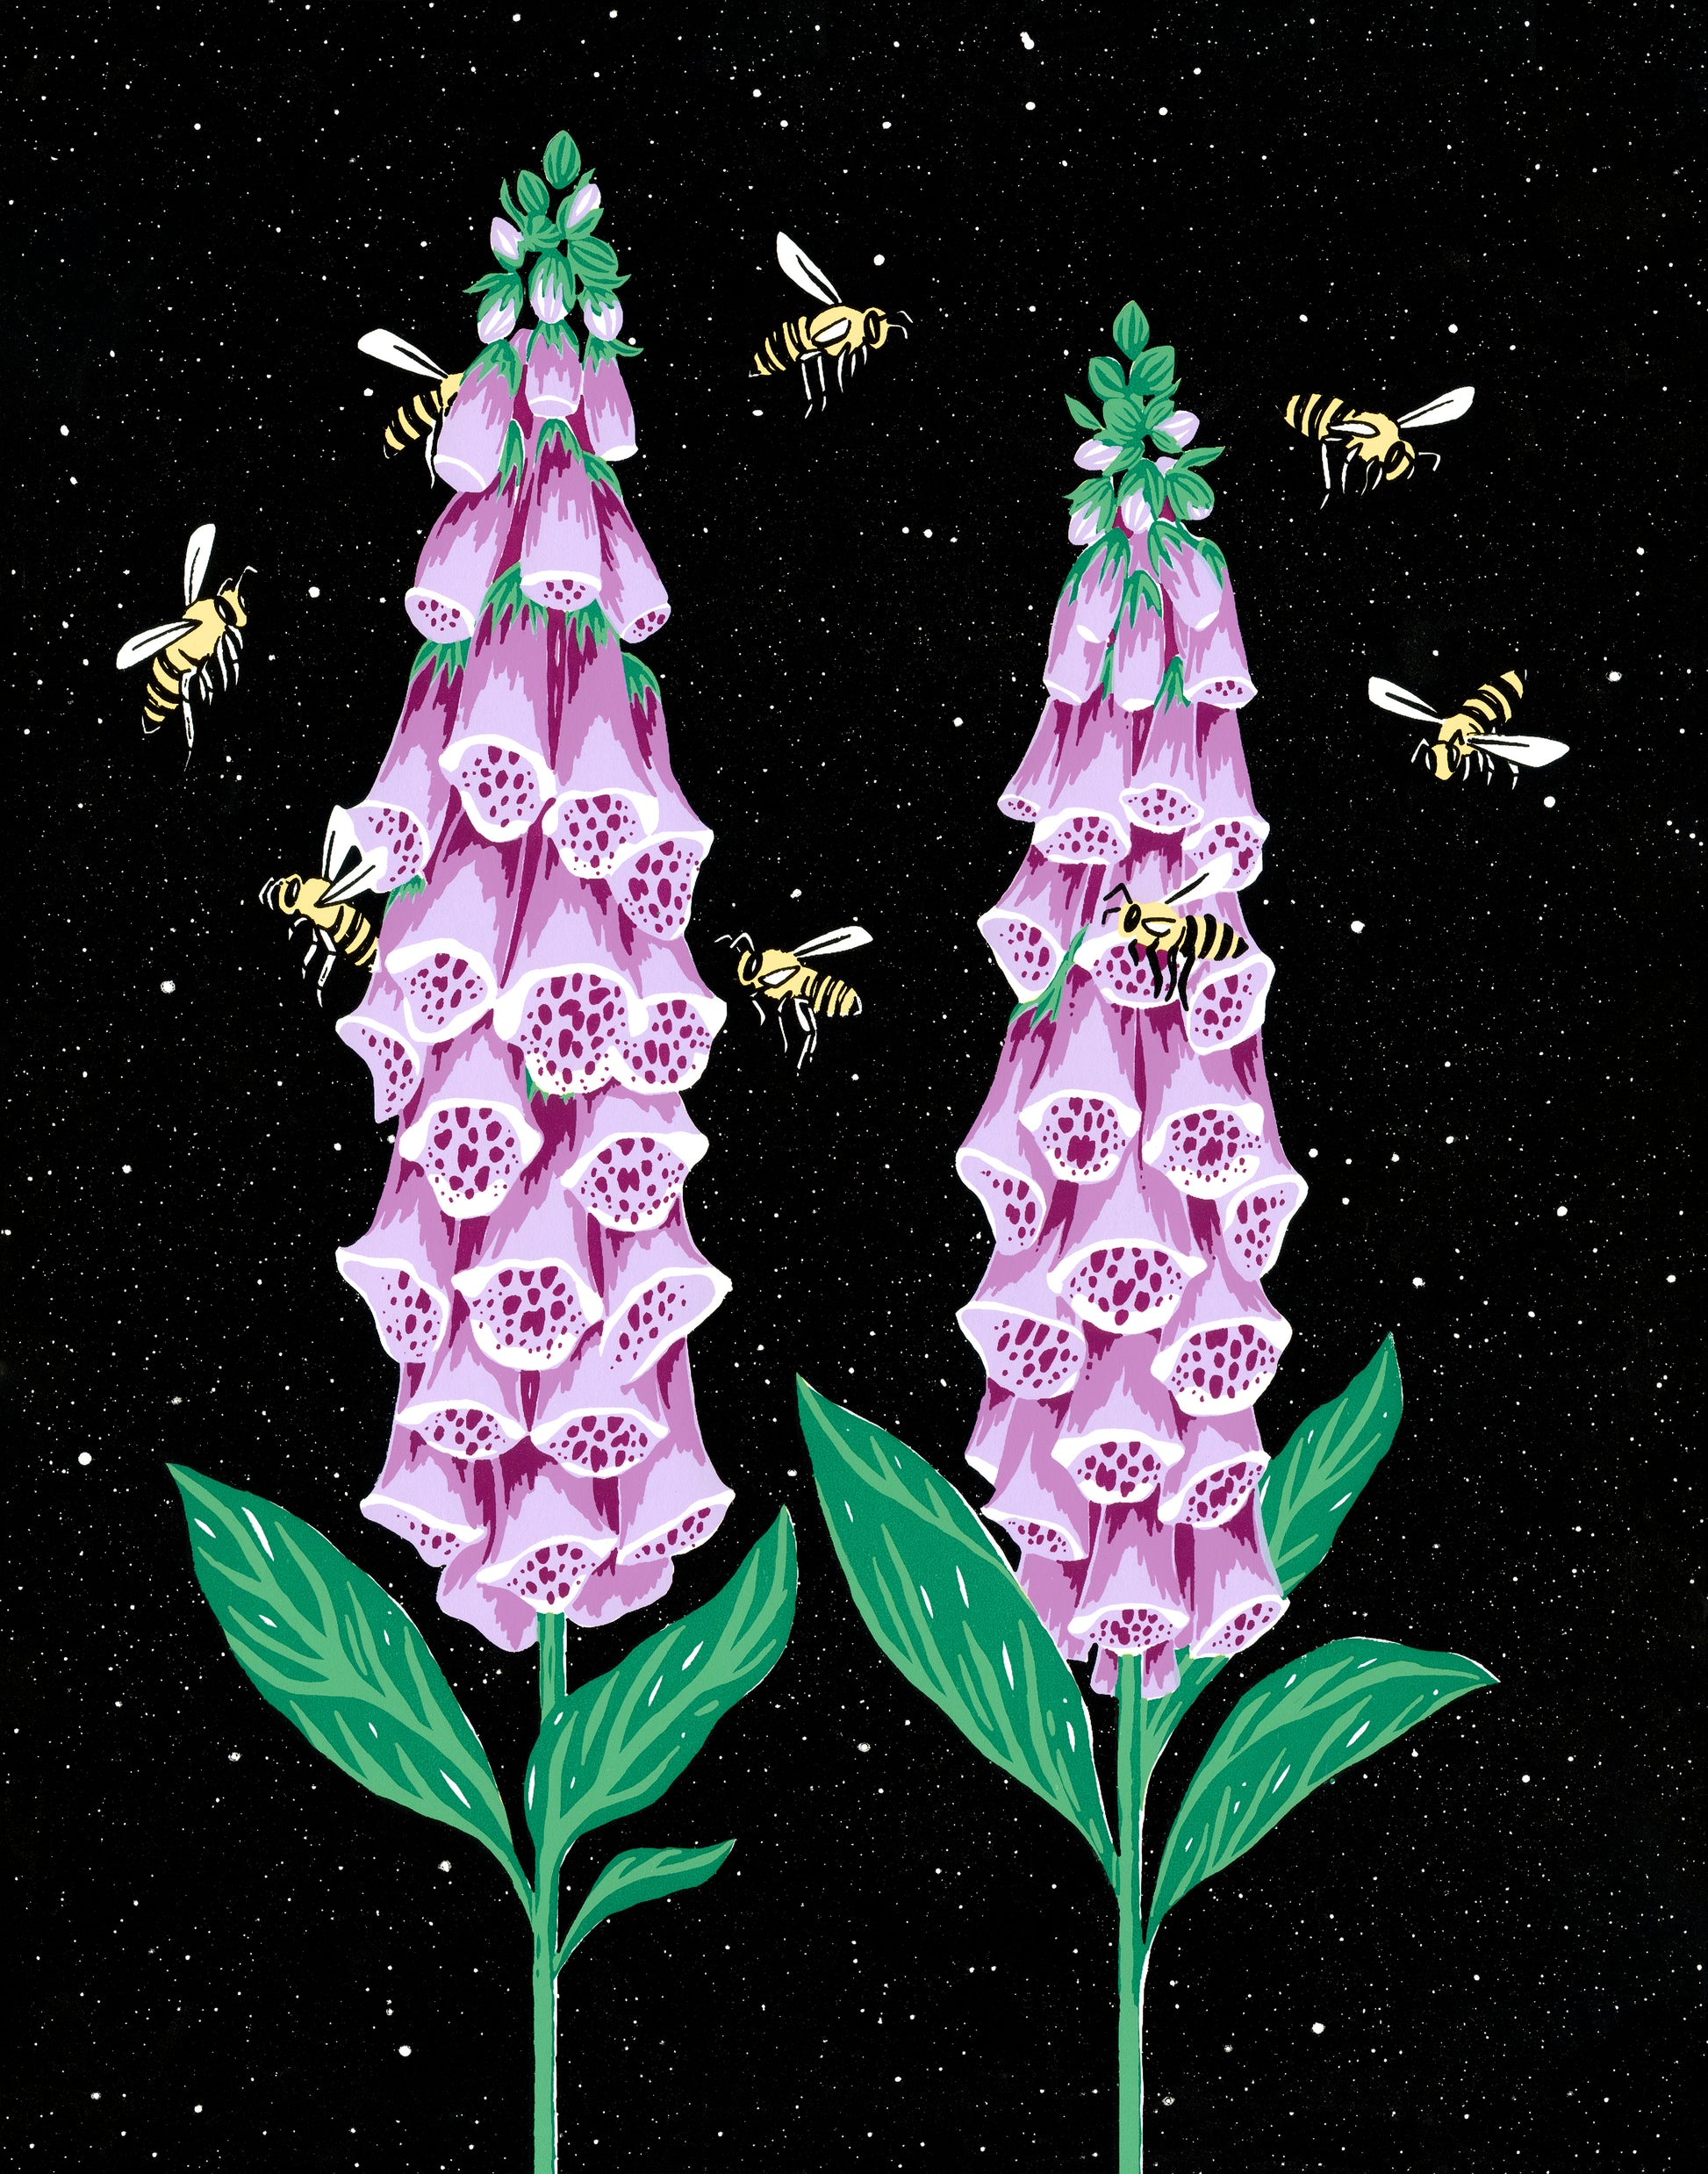 Original painting of foxglove flowers with honeybees